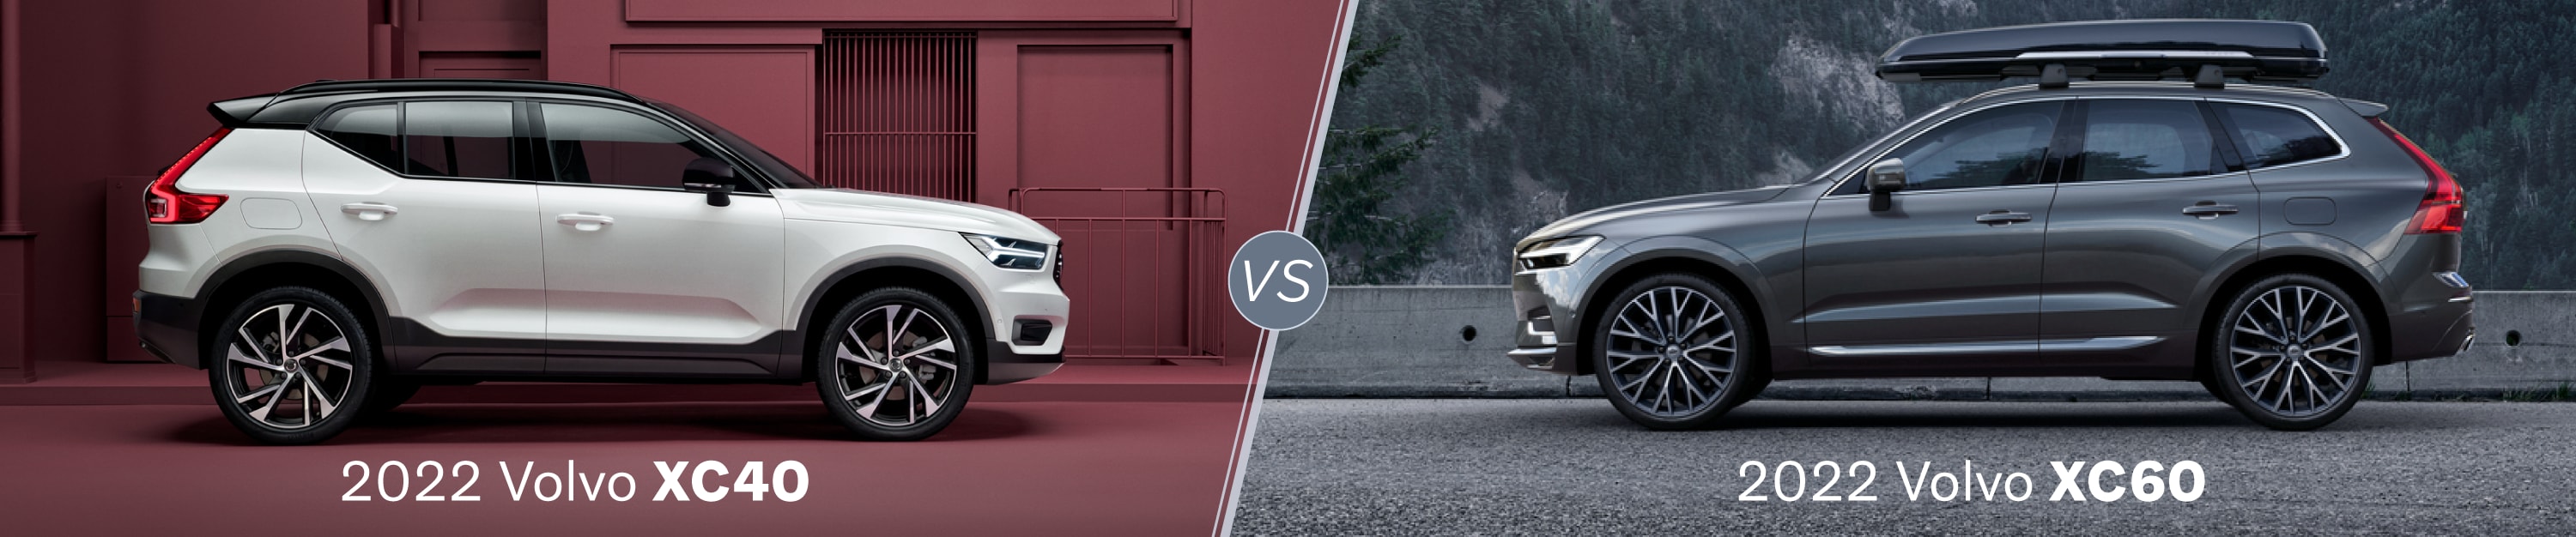 2022 Volvo xc40 vs xc60 comparison